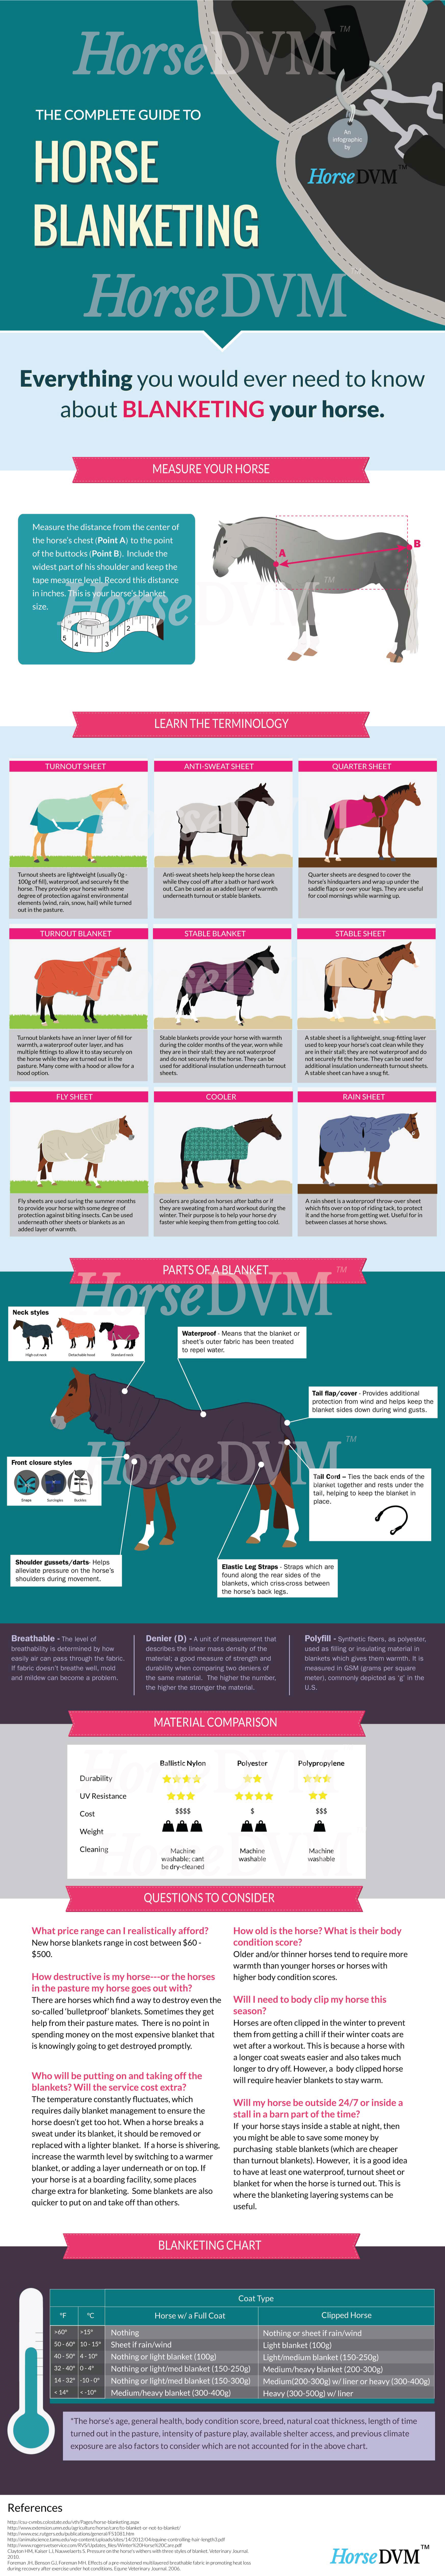 HorseDVM - horsedvm-complete-guide-blanketing-horse-blanketing